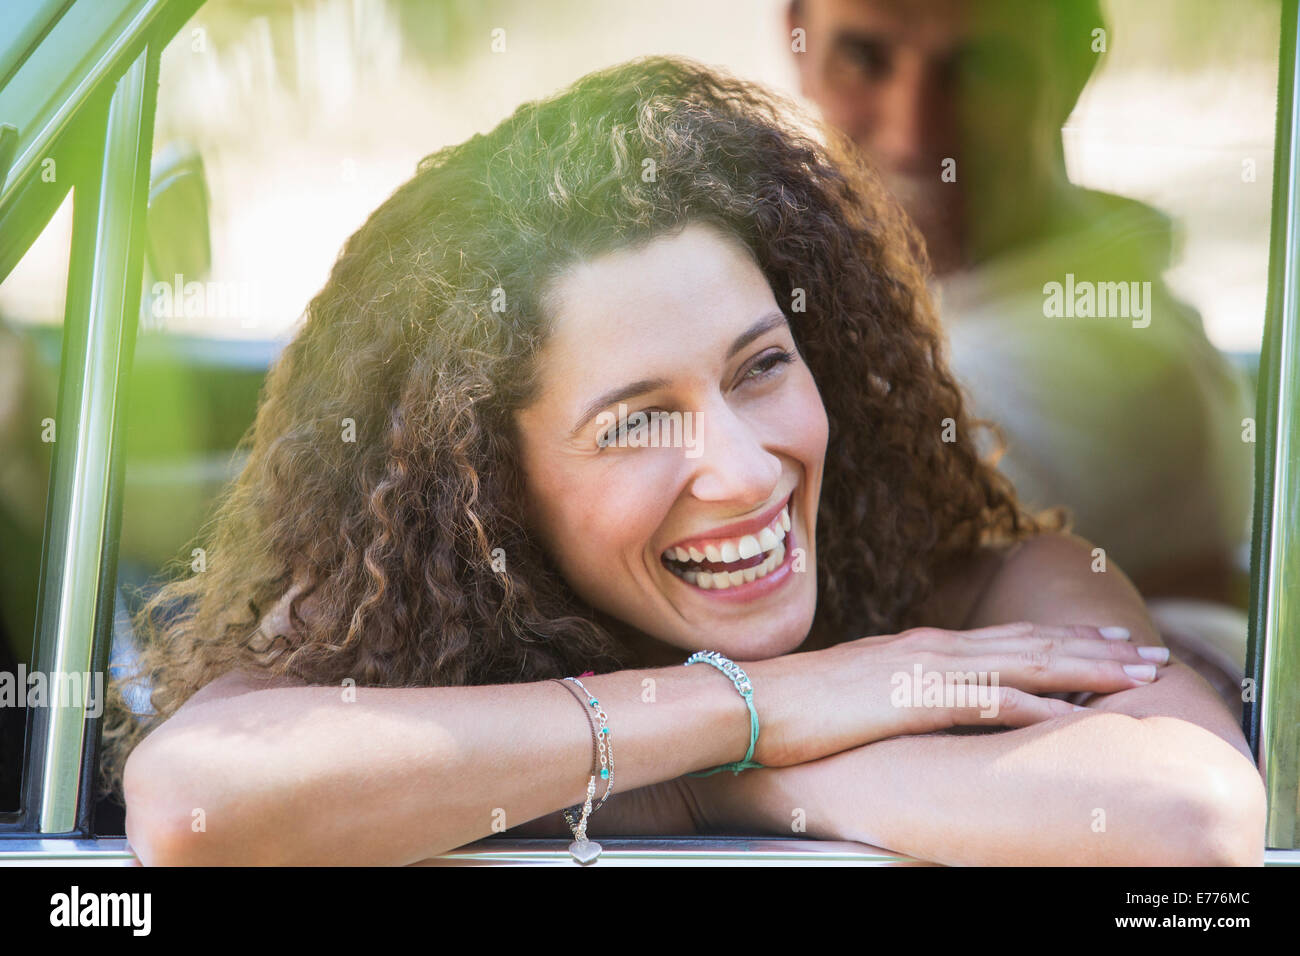 Woman relaxing on car door during car ride Stock Photo